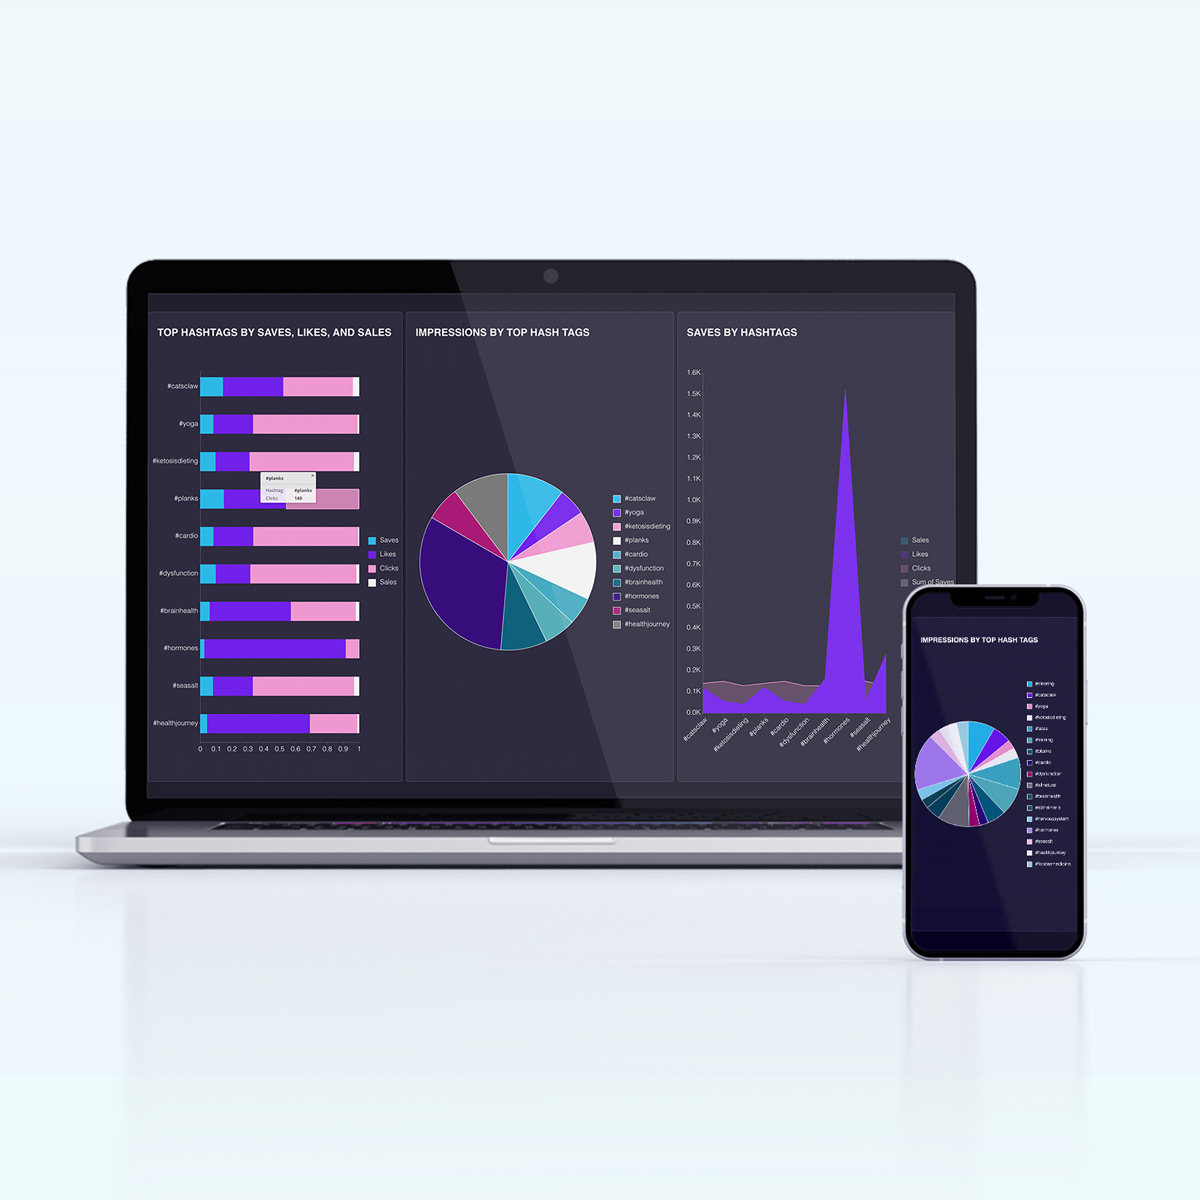 Business Intelligence Dashboard - Social Media Marketing Dashboard